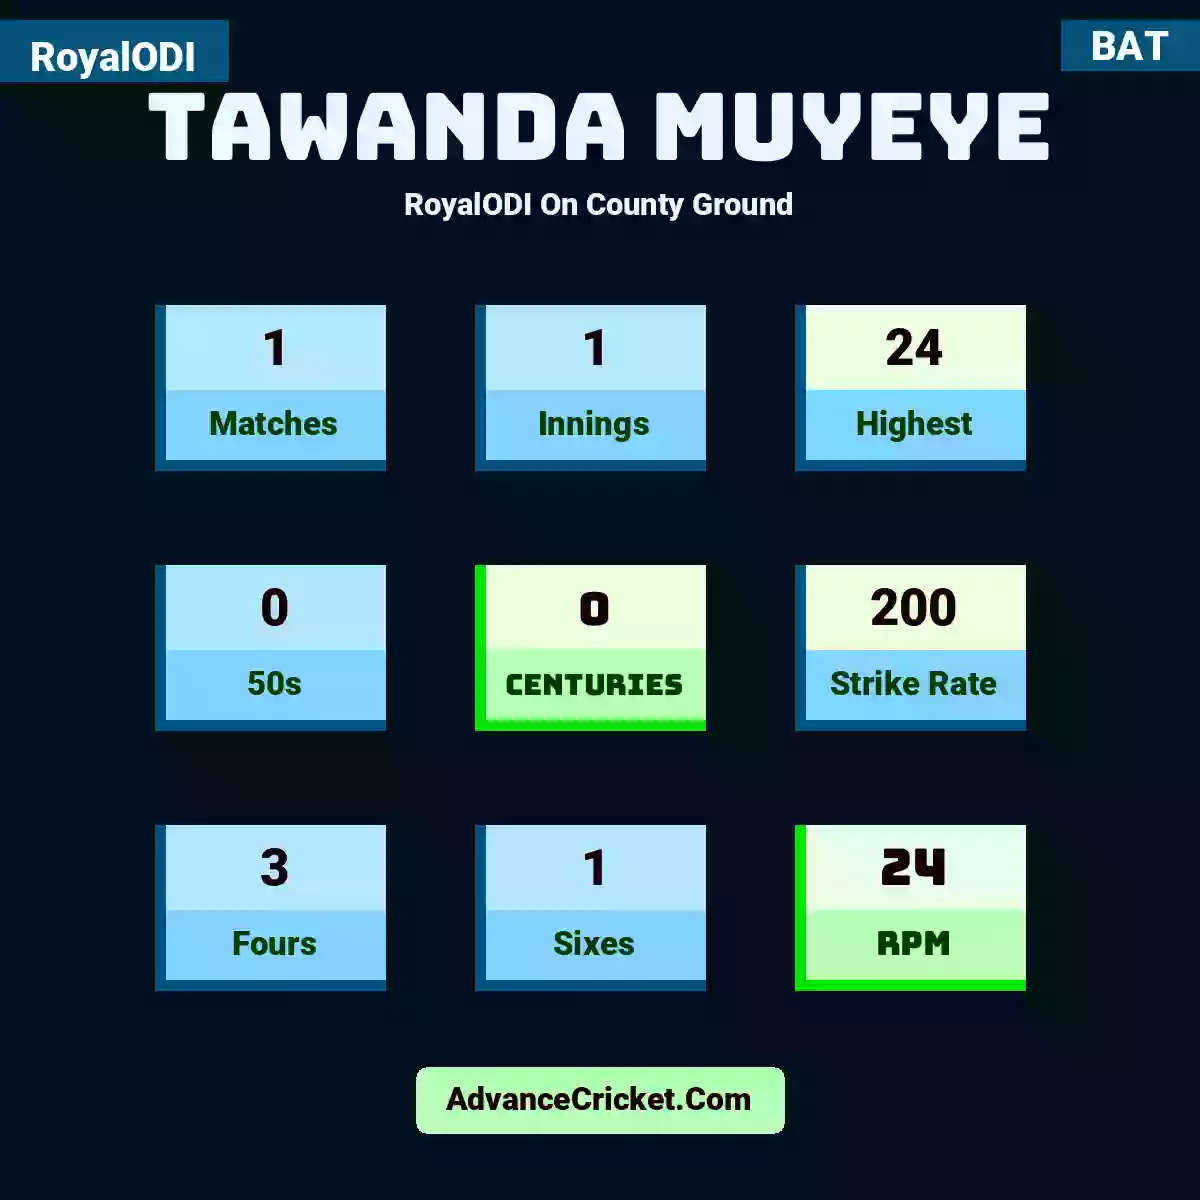 Tawanda Muyeye RoyalODI  On County Ground, Tawanda Muyeye played 1 matches, scored 25 runs as highest, 0 half-centuries, and 0 centuries, with a strike rate of 108. T.Muyeye hit 4 fours and 1 sixes, with an RPM of 25.